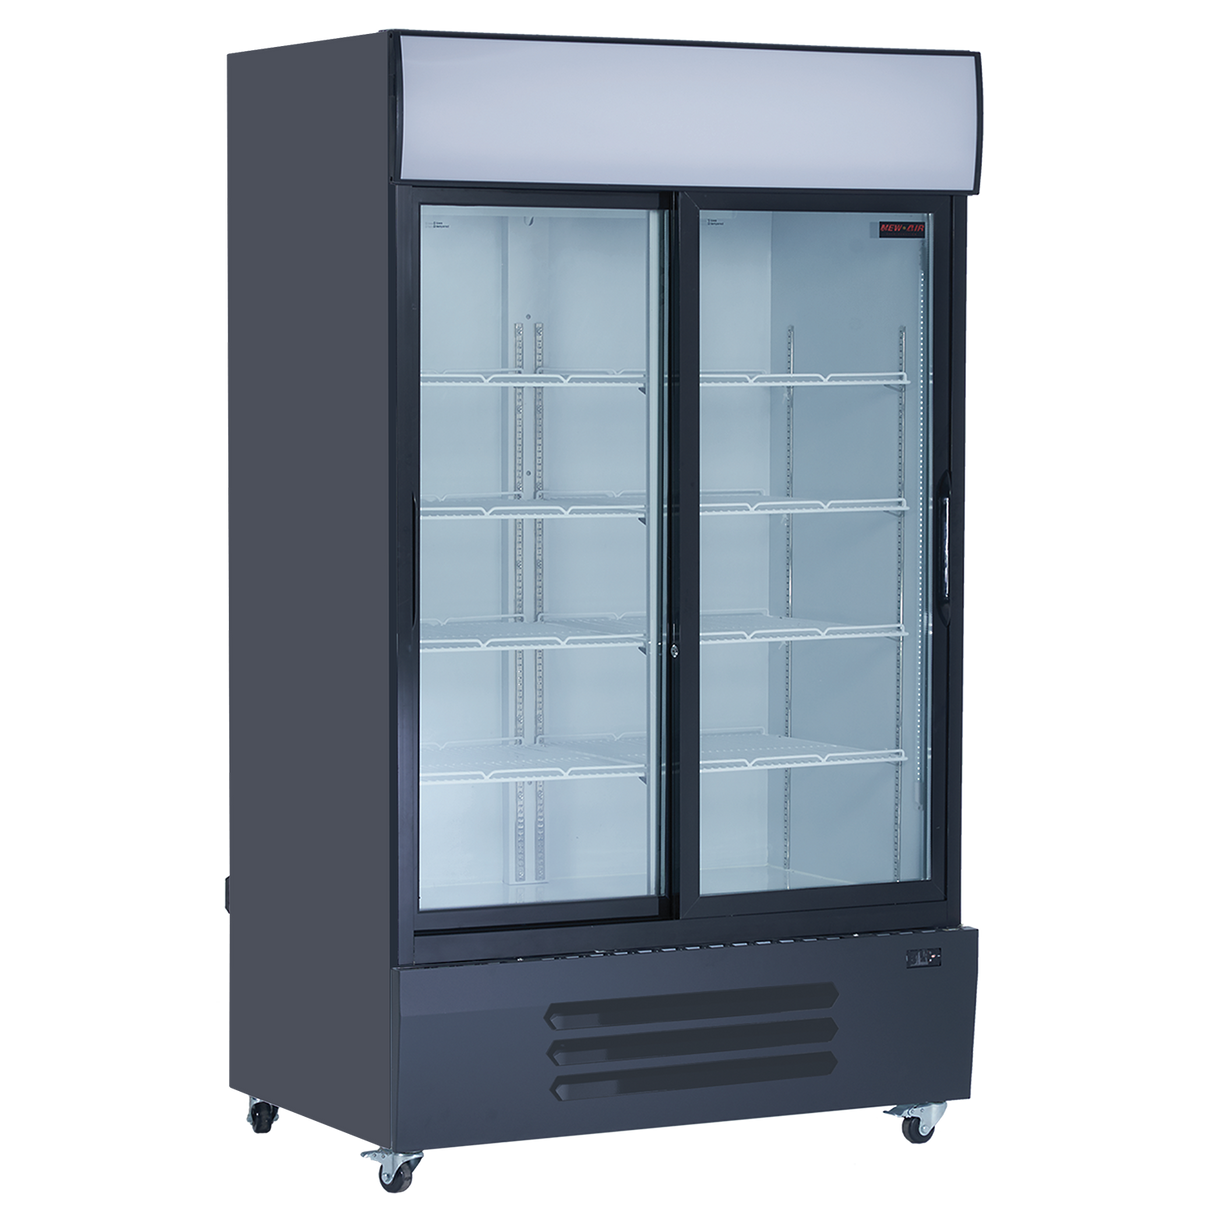 New Air NGR-115-S 40.5 p3 Refrigerator - 2 Doors